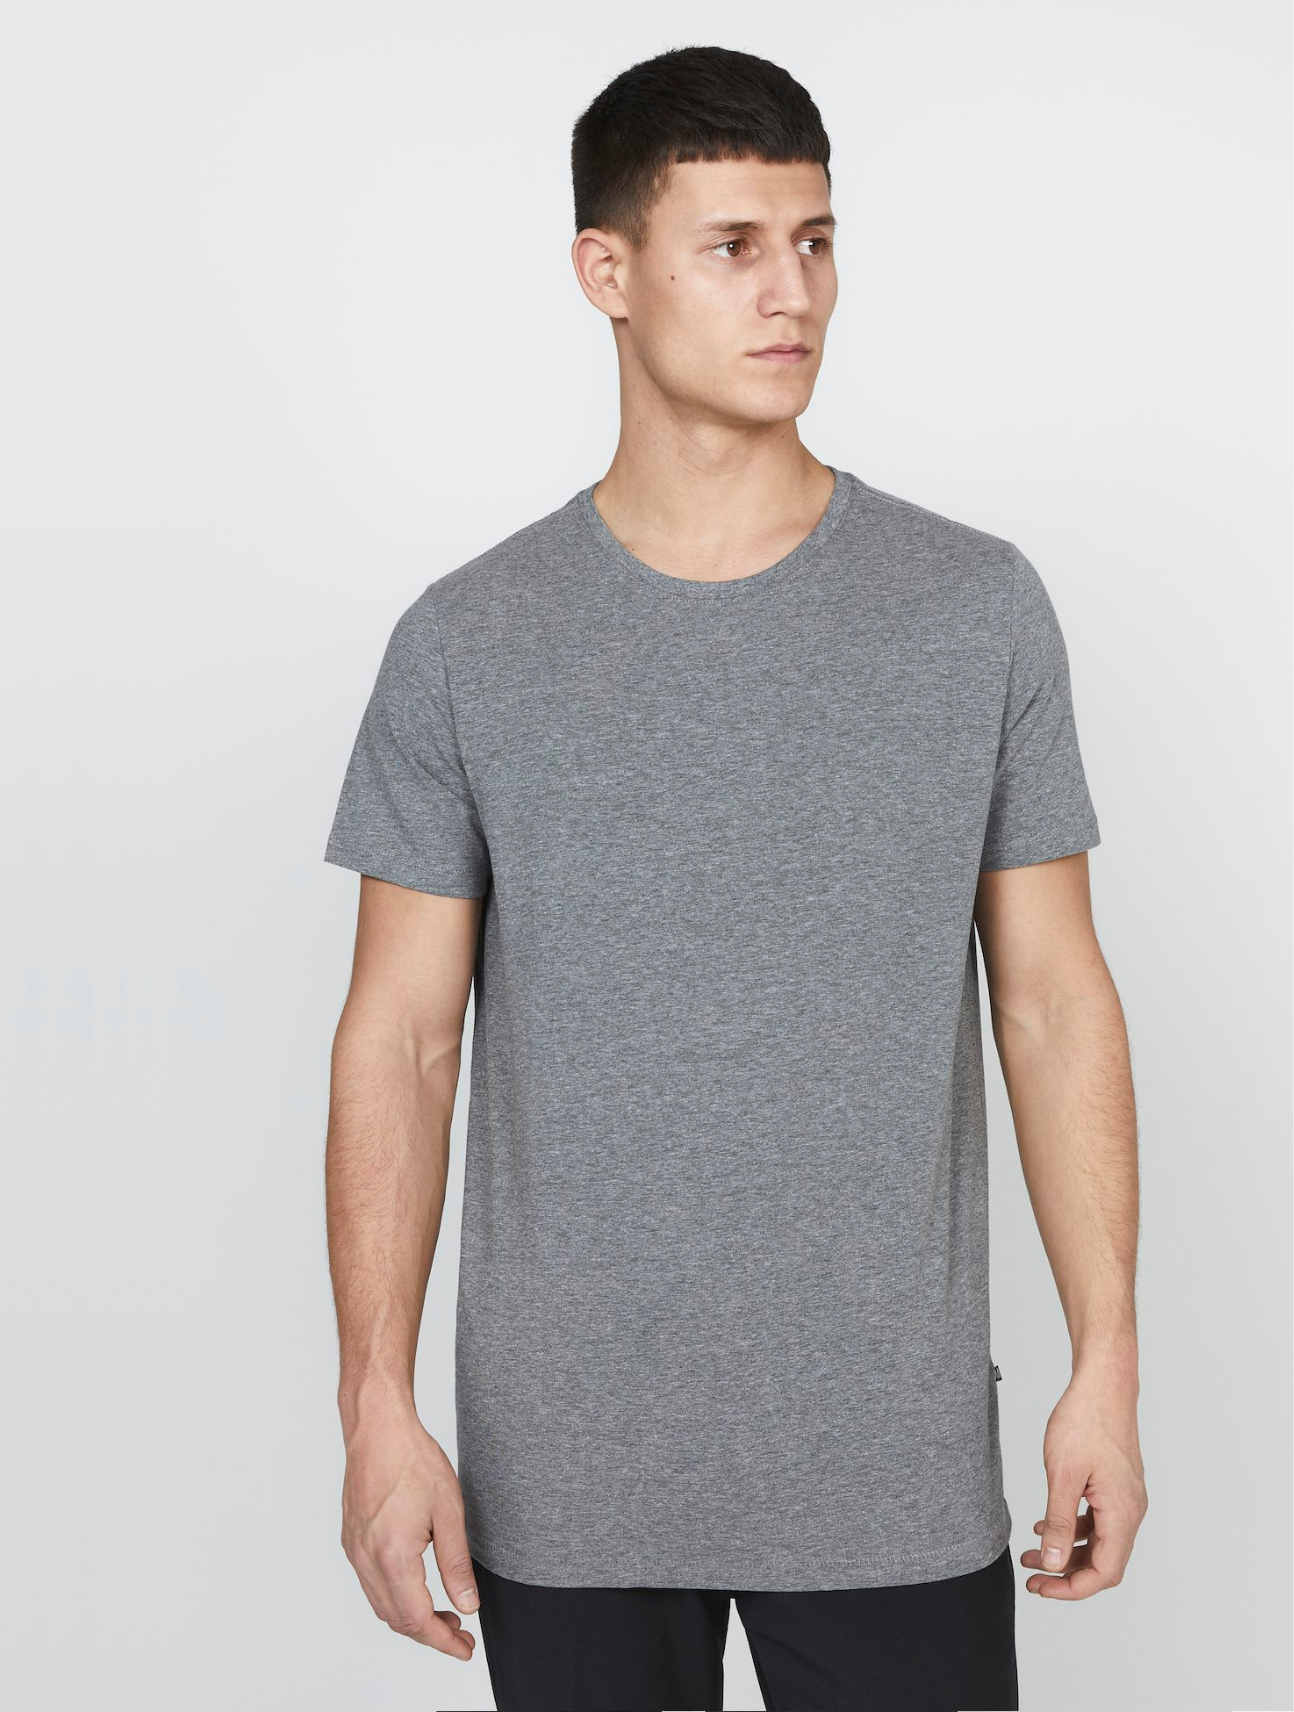 Jermalink T-Shirt